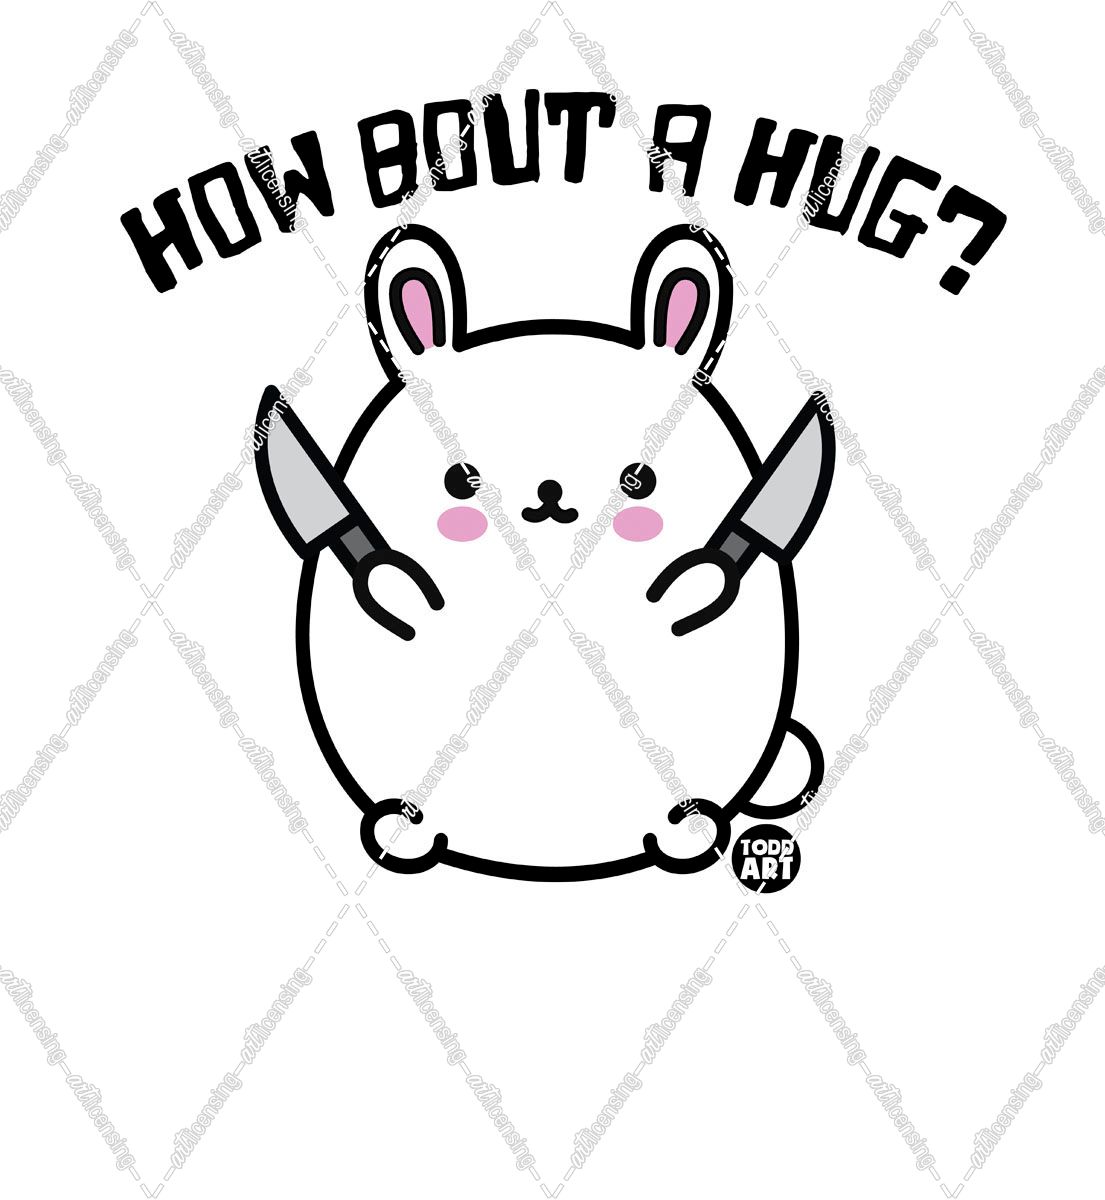 Bad Bunny – How Bout A Hug